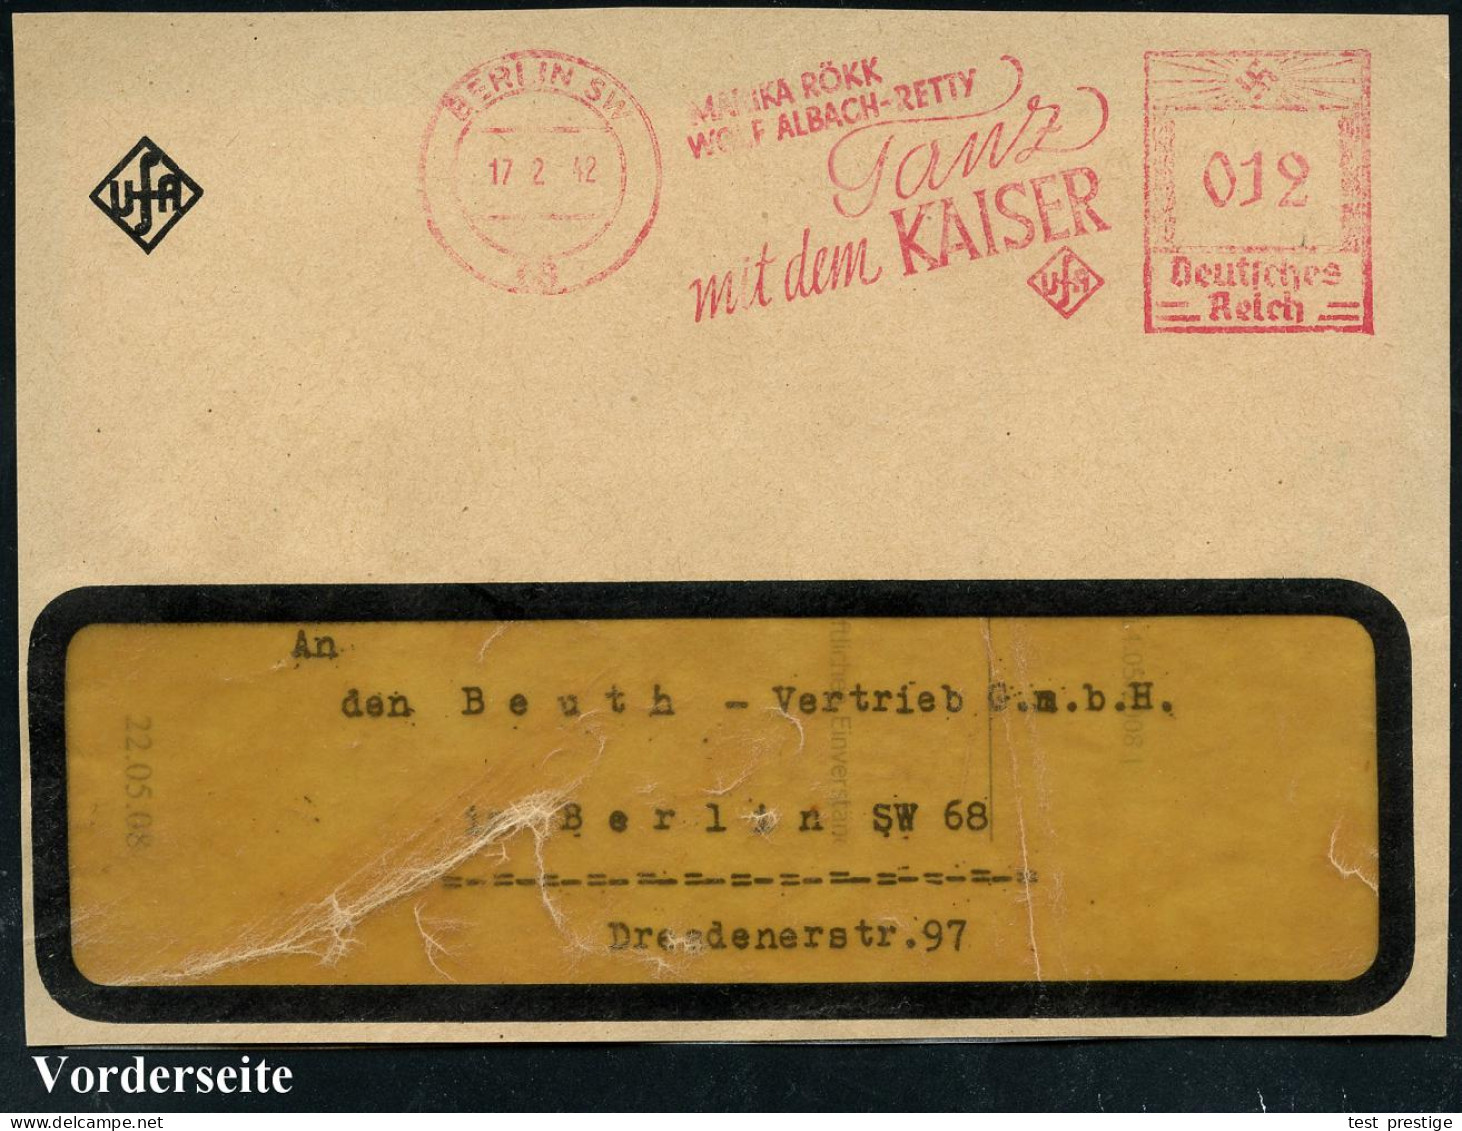 BERLIN SW 68/ MARIKA RÖKK/ W.ALBACH-RETTY/ Tanz/ Mit Dem KAISER/ UfA 1942 (17.2.) Seltener AFS Francotyp = Film über Kai - Danse